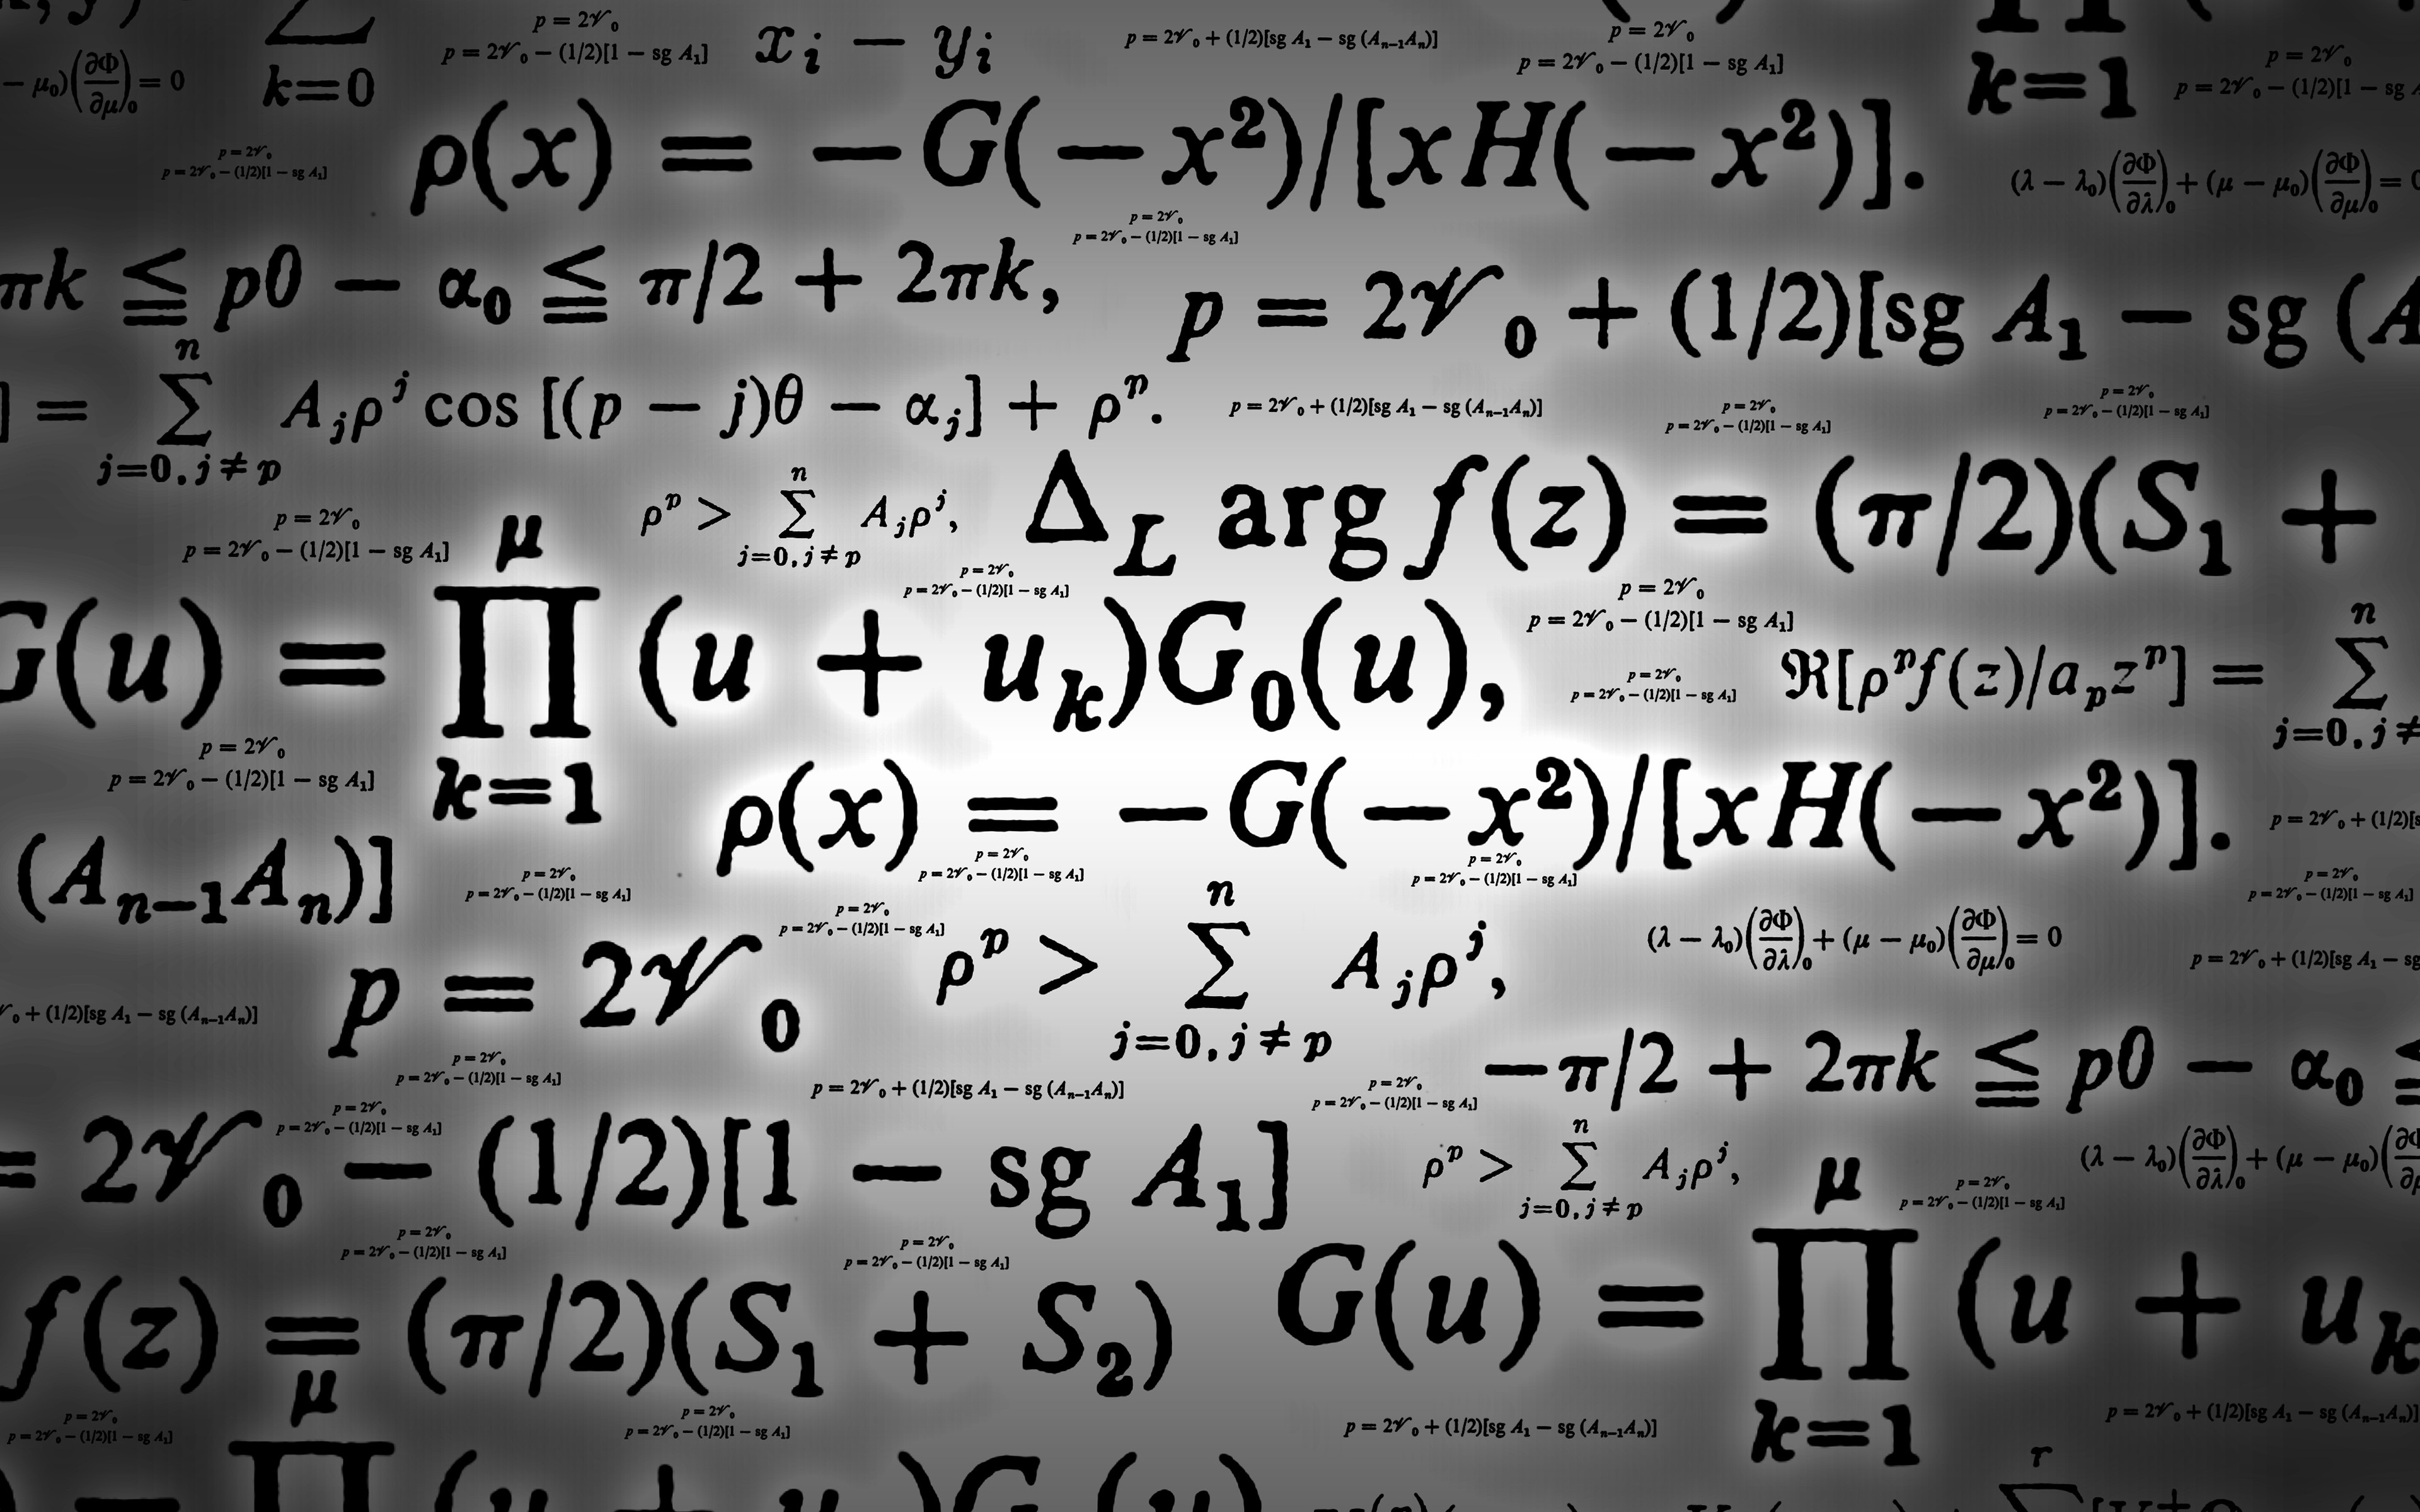 General 3840x2400 mathematics formula equation science gray monochrome